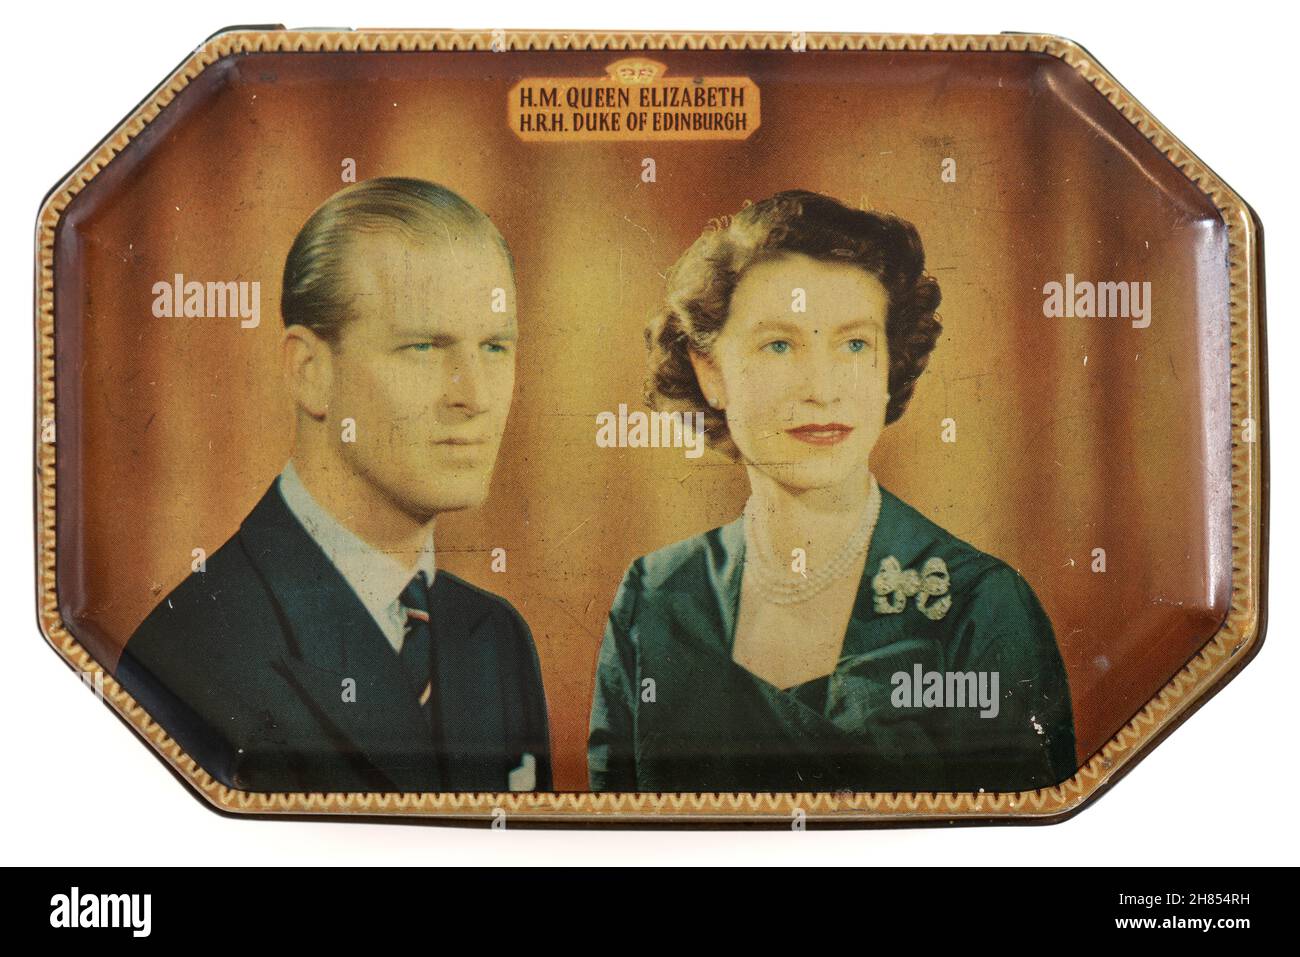 Queen Elizabeth 1953 coronation tin with portrait of HM Queen Elizabeth II and HRH Duke of Edinburgh by John S Derbyshire Stock Photo